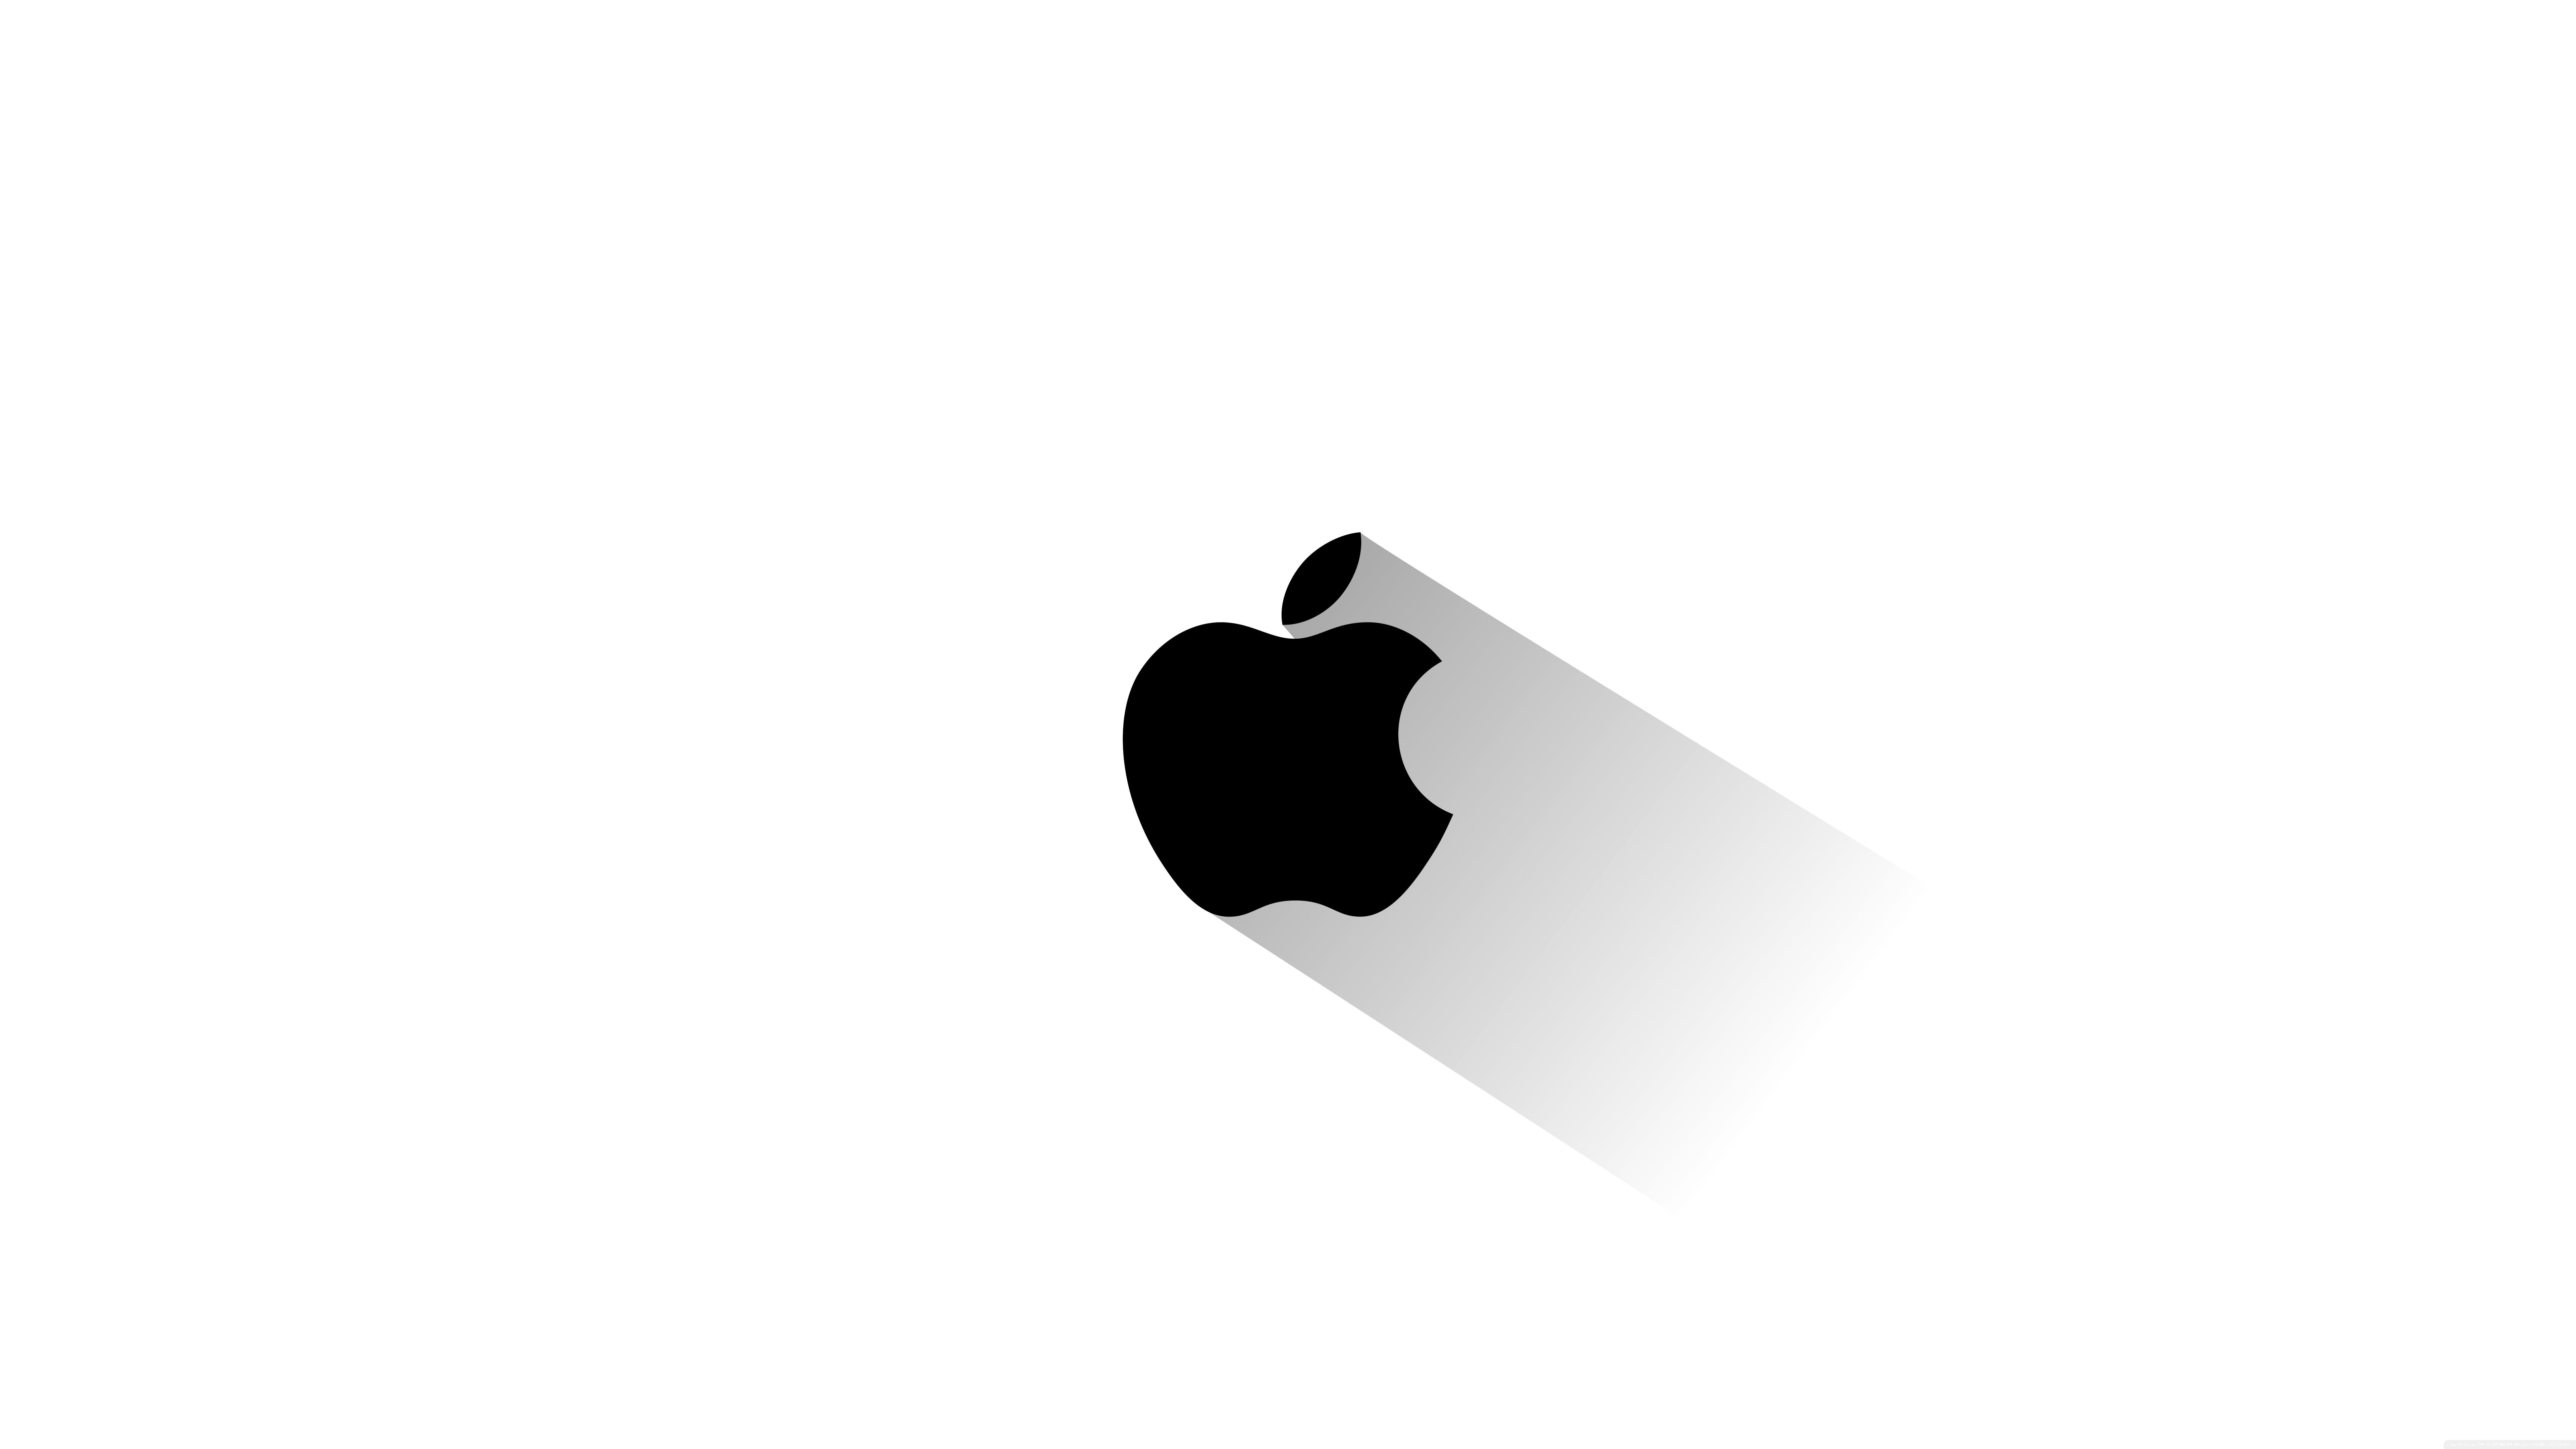 Apple Logo 8k Ultra HD Wallpaper. Background Image